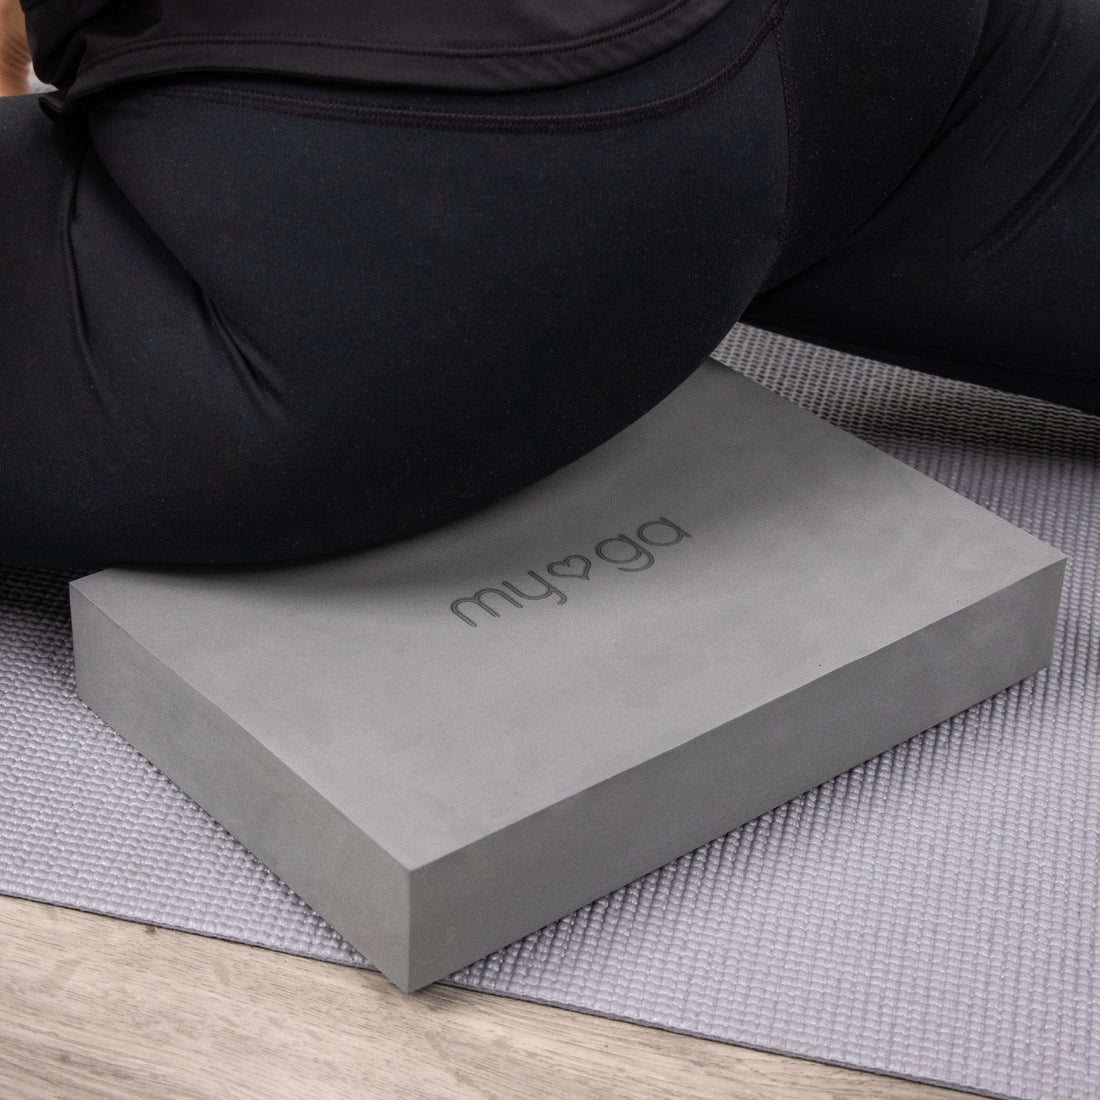 Myga XL Yoga Block - High Density Non-Slip Foam Brick for Yoga